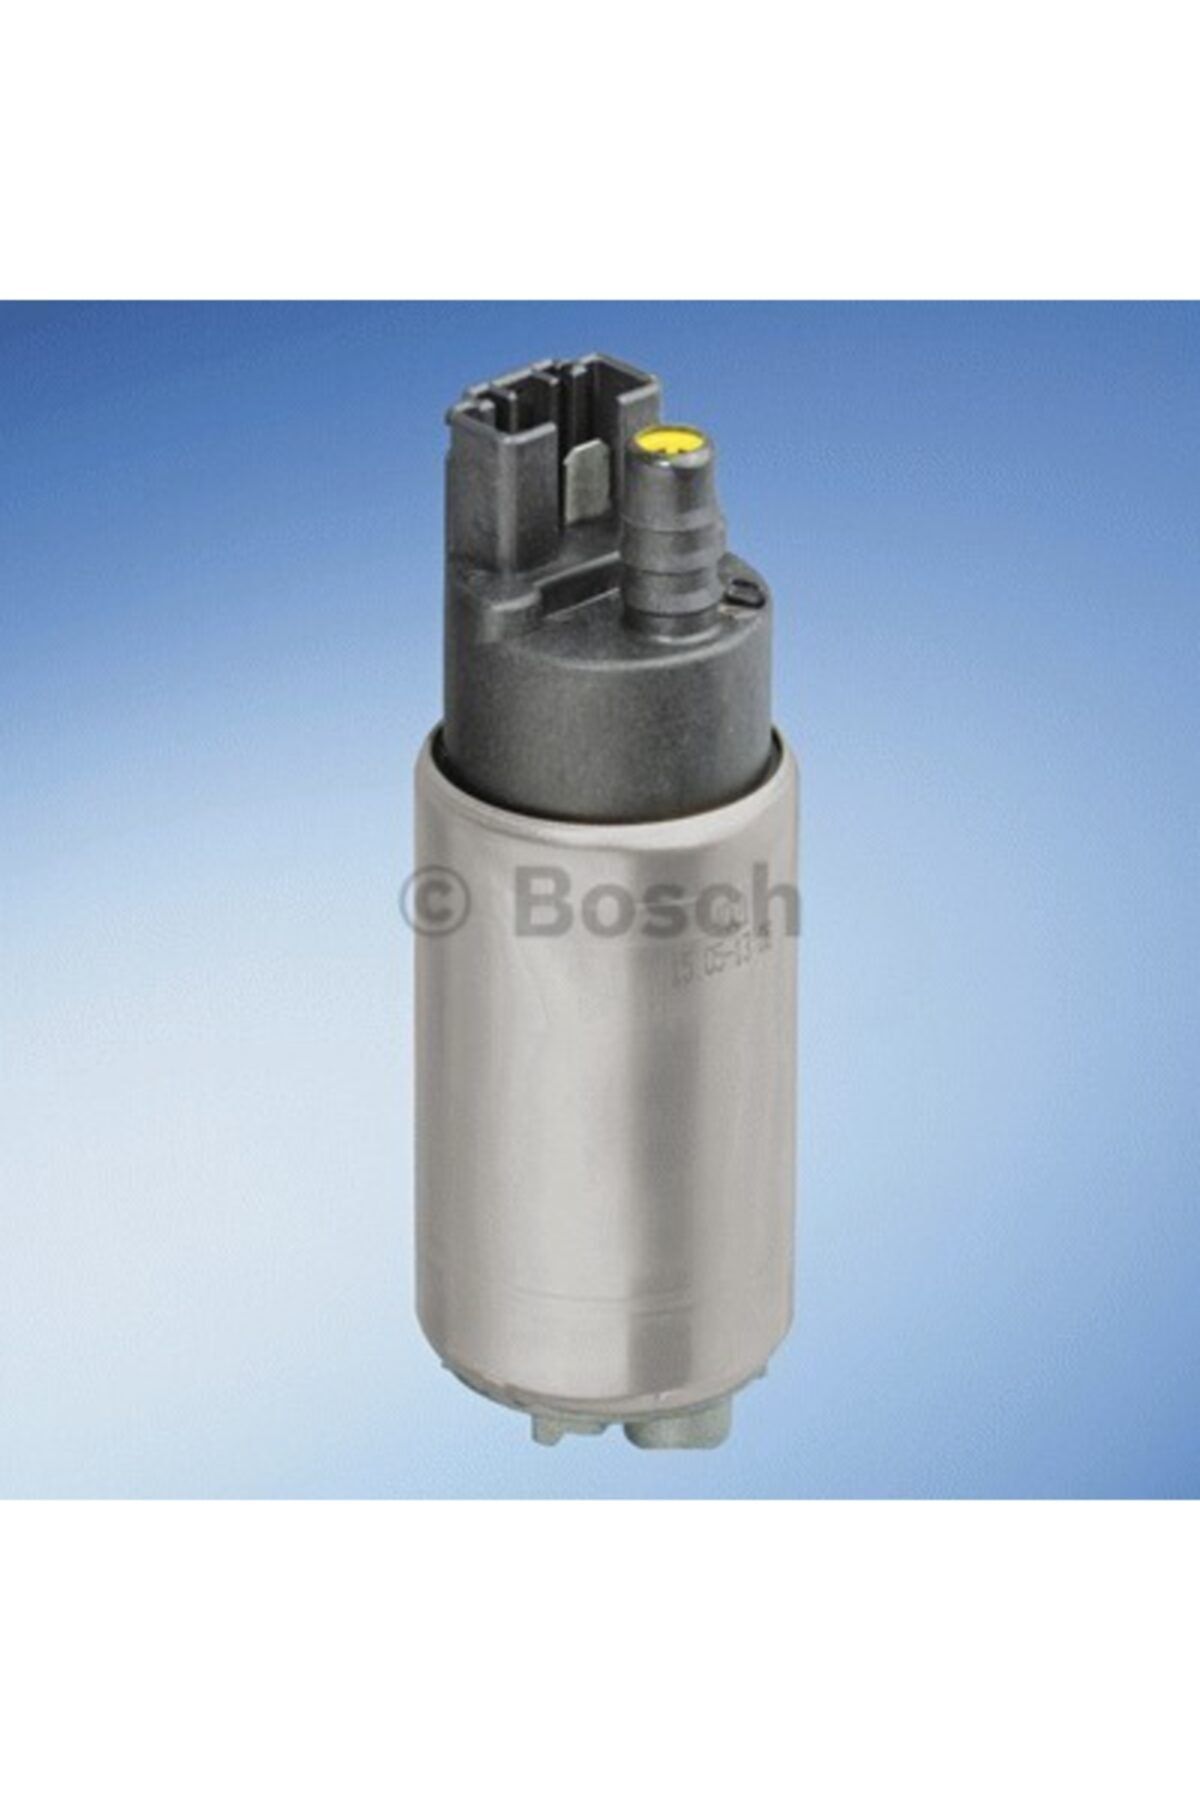 Bosch 0580453035 Yakıt Pompası Elektrikli 3.5 Bar Üniversal / Lada Samara / Corsa C-vectra C / Albea 1.4bo